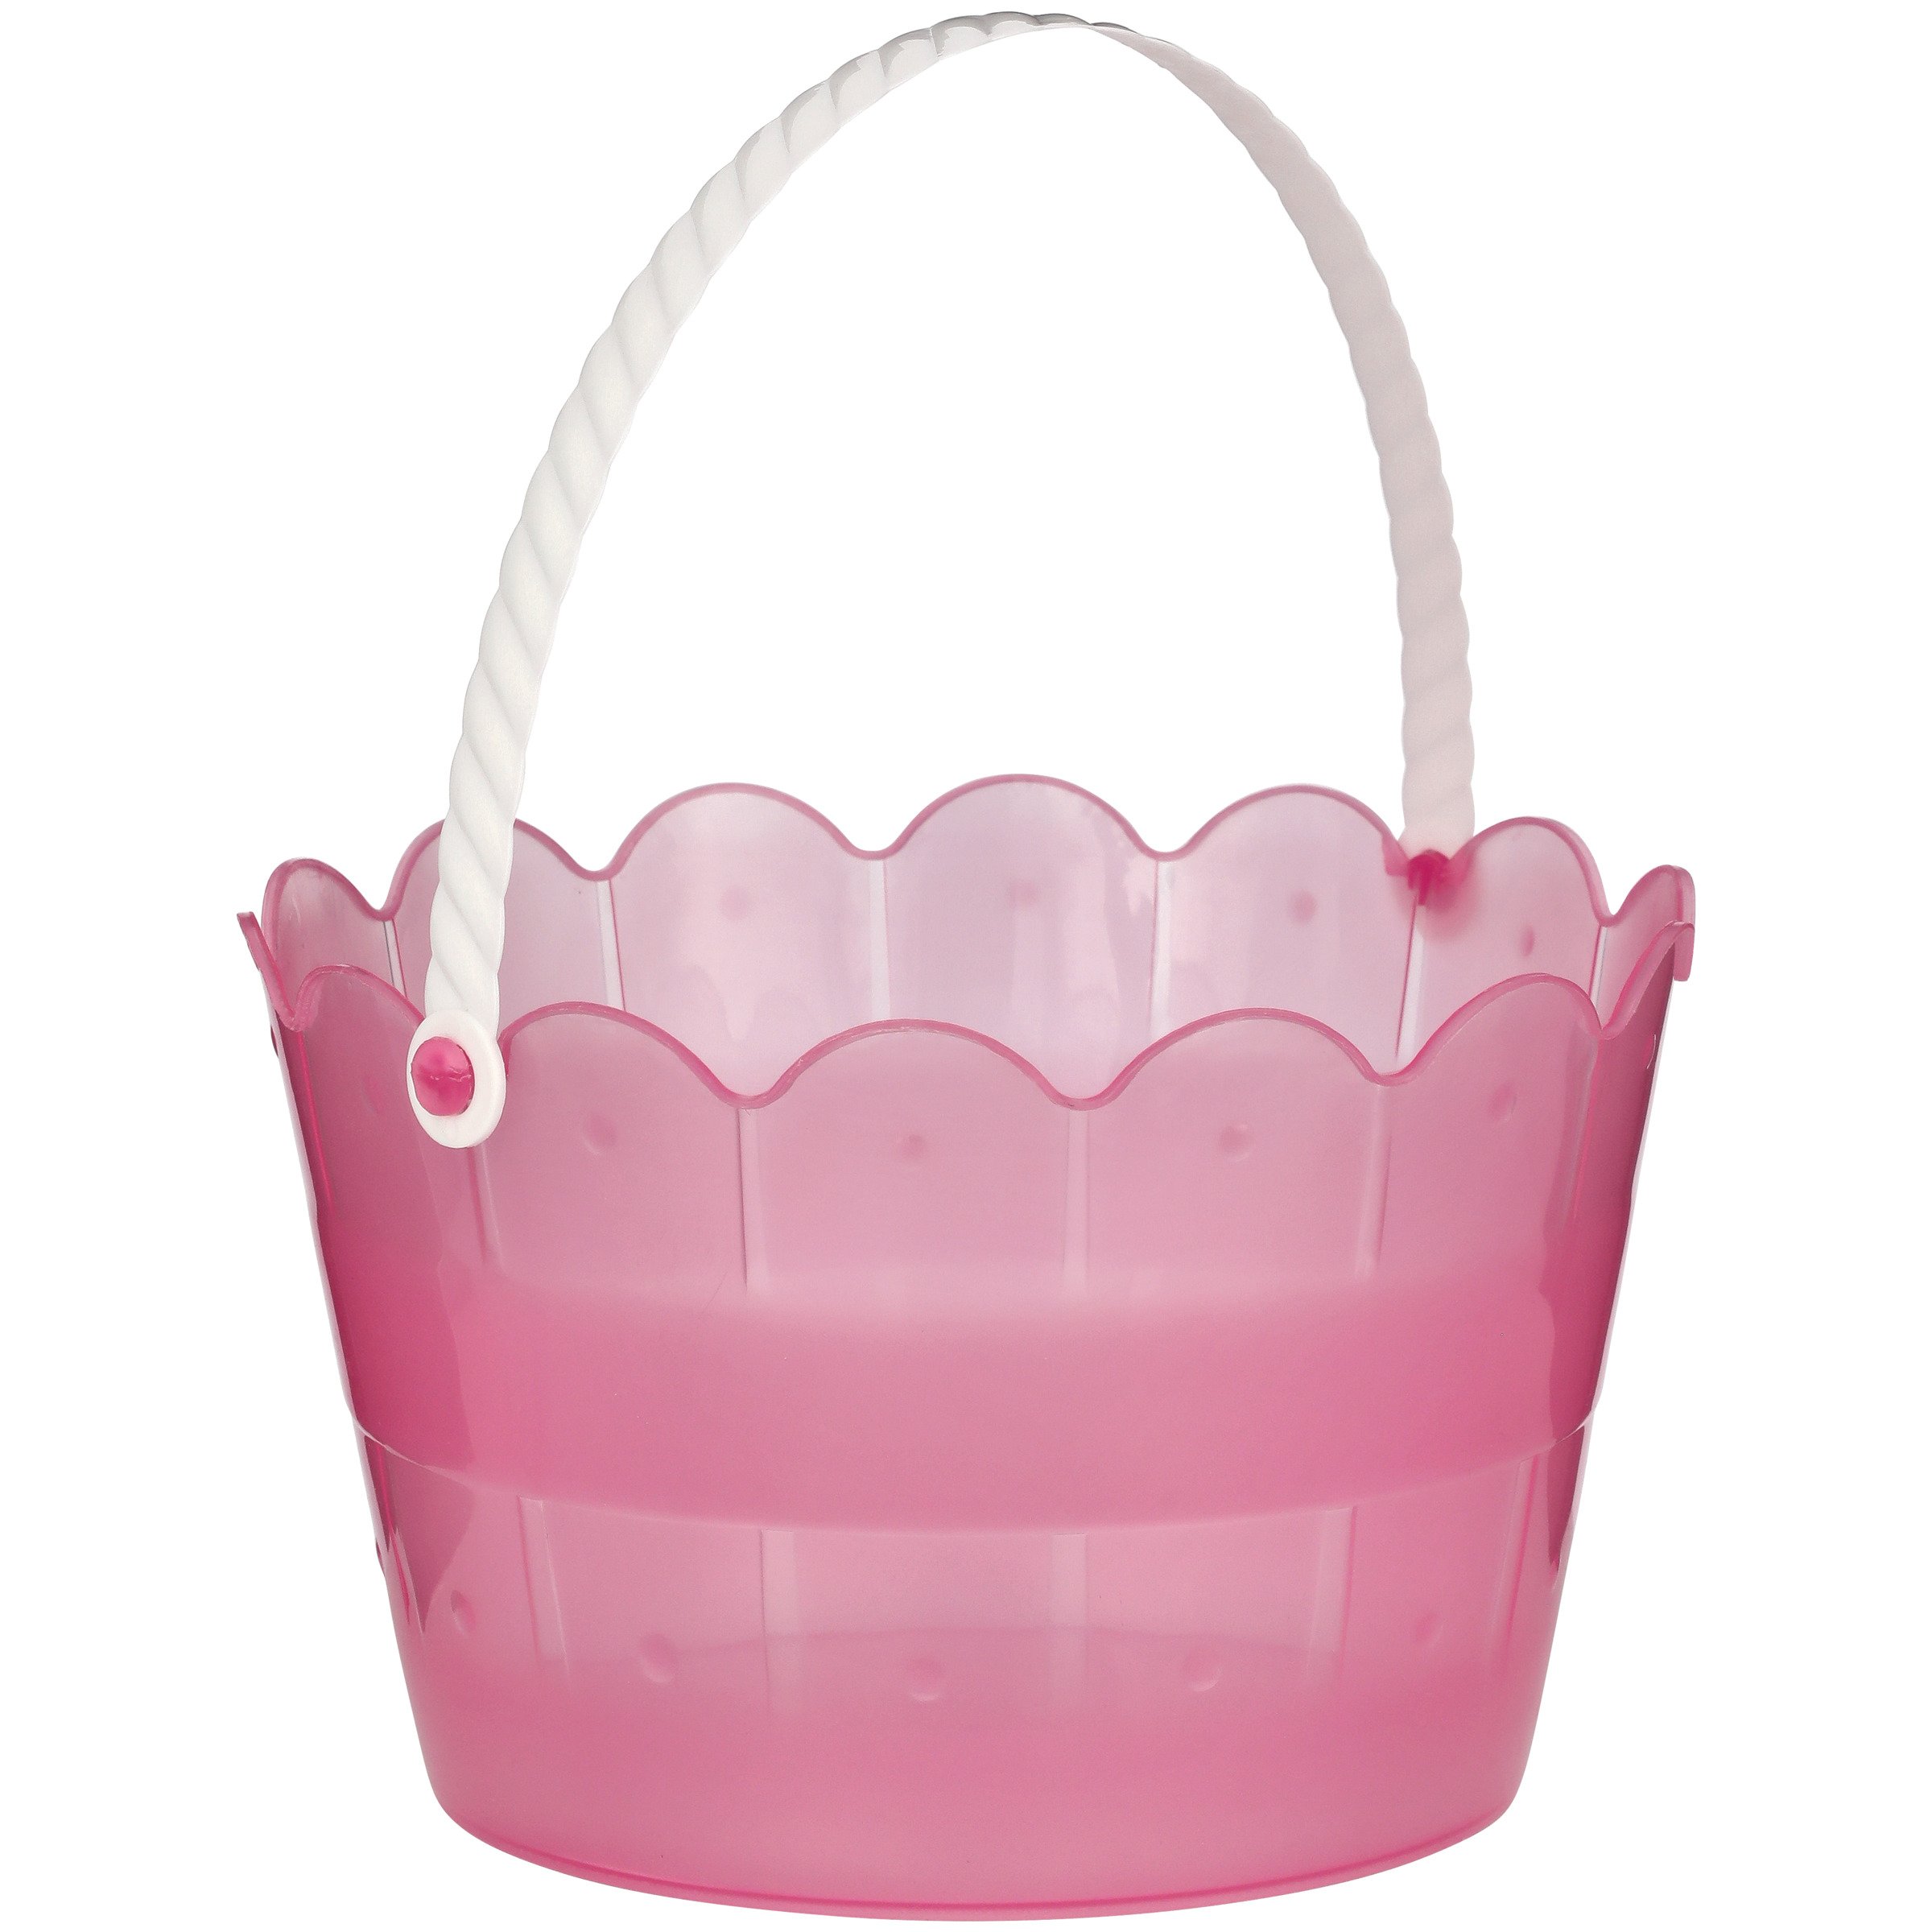 Destination Holiday Scallop Rim Plastic Easter Basket Pink Shop Seasonal Decor At H E B